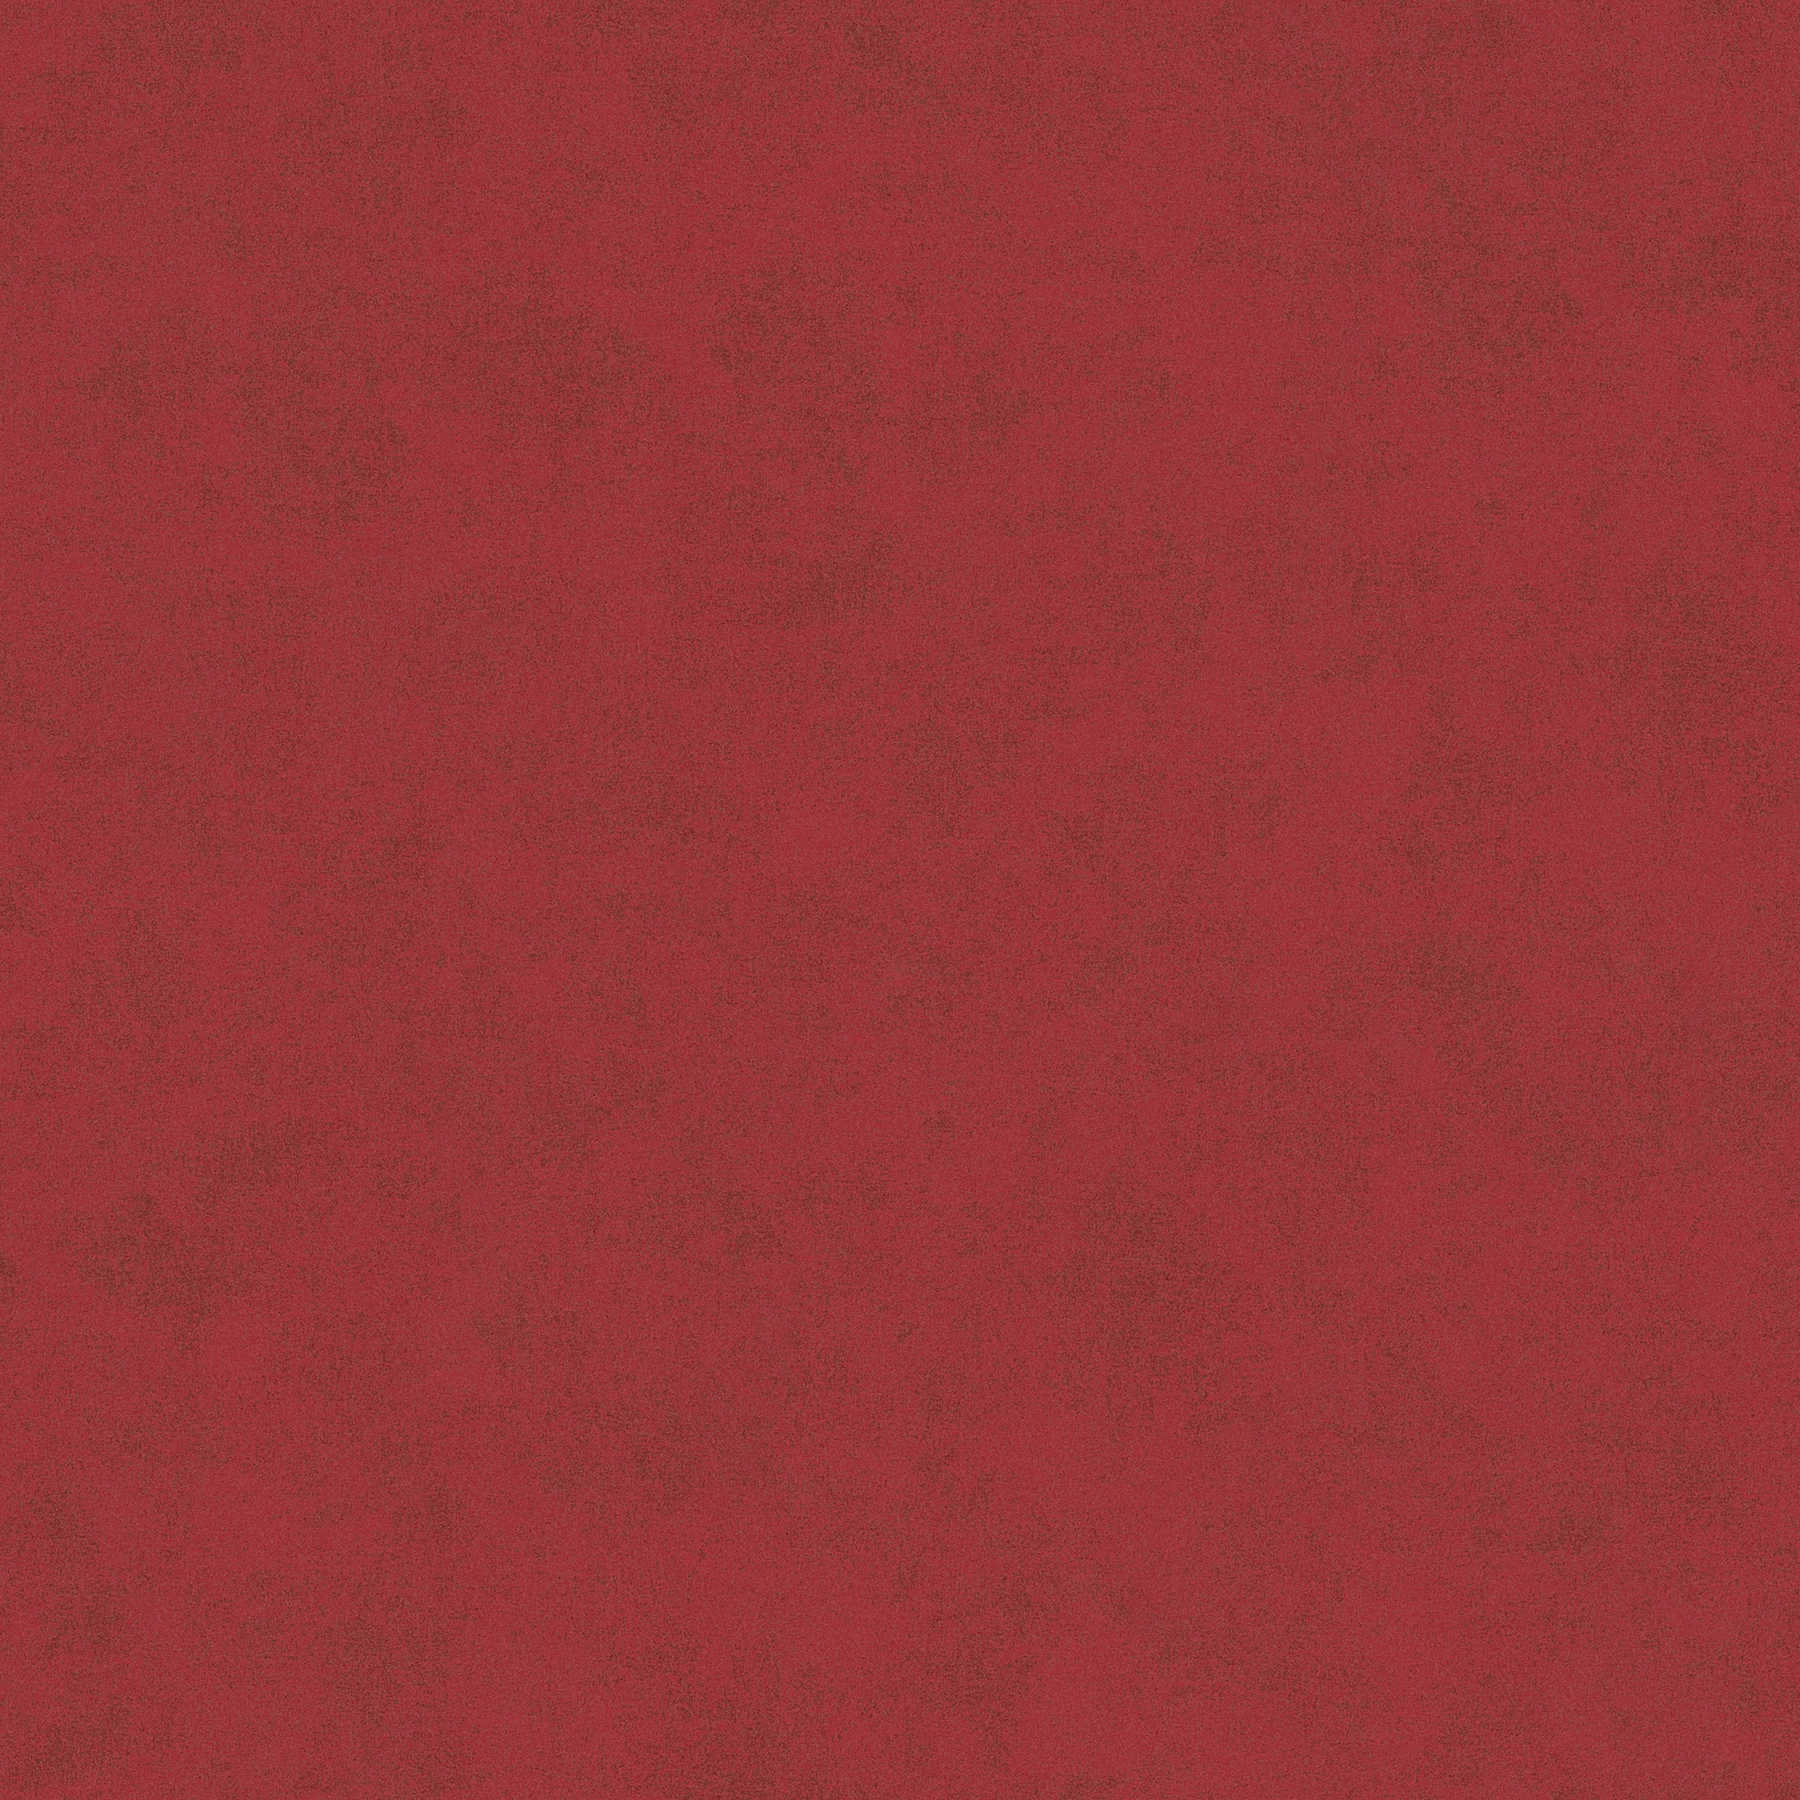 Papel pintado liso no tejido con estructura moteada - rojo
